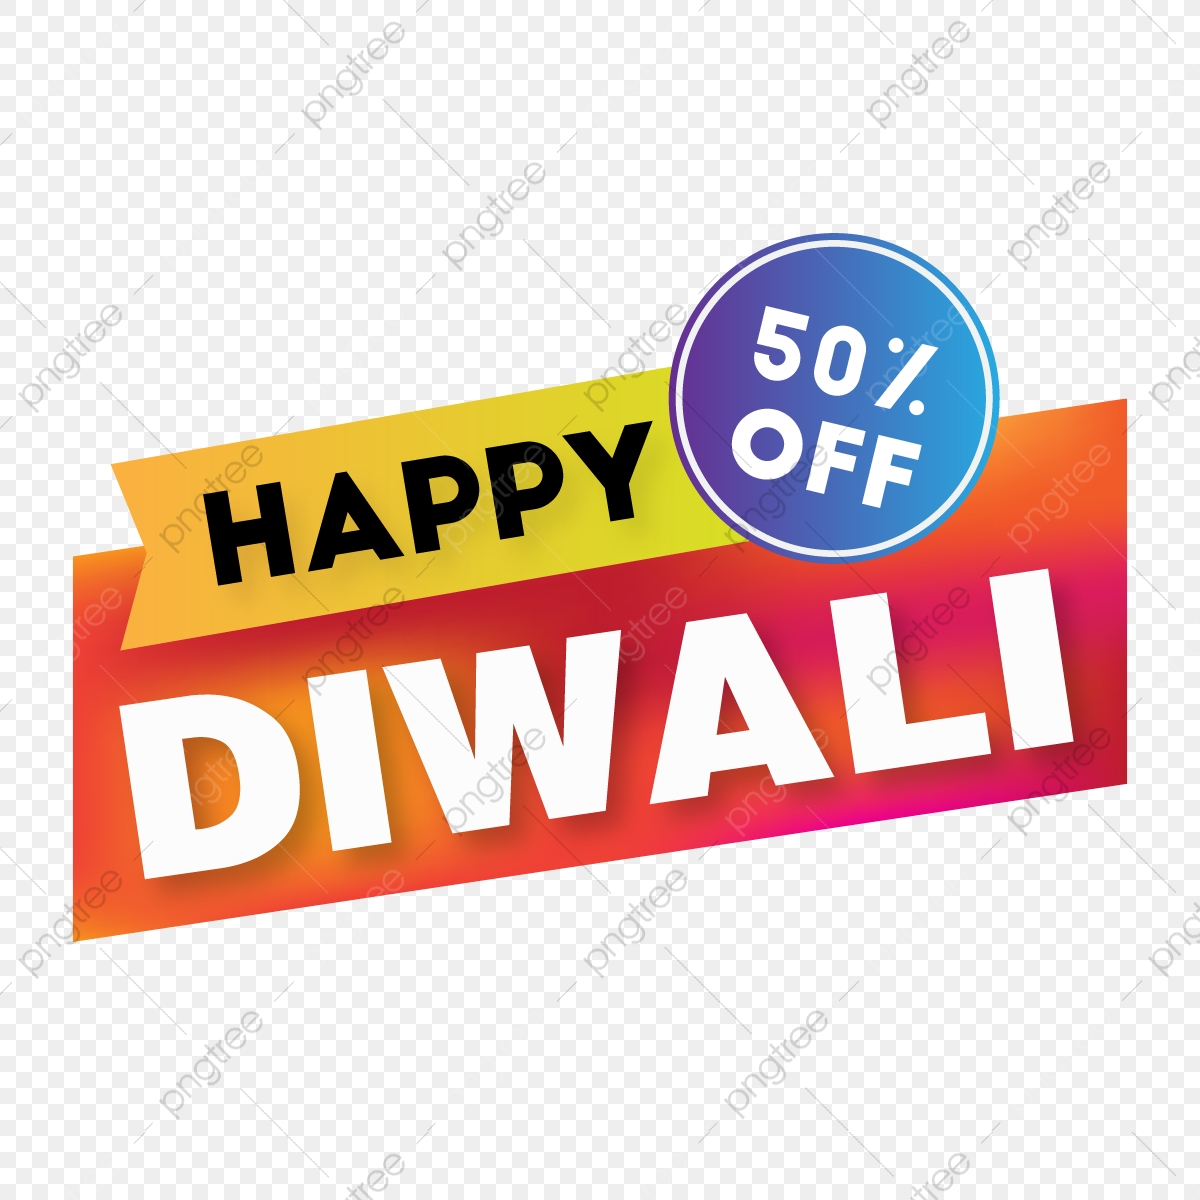 Special Happy Diwali Offer Sticker Label, Diwali, Festival.